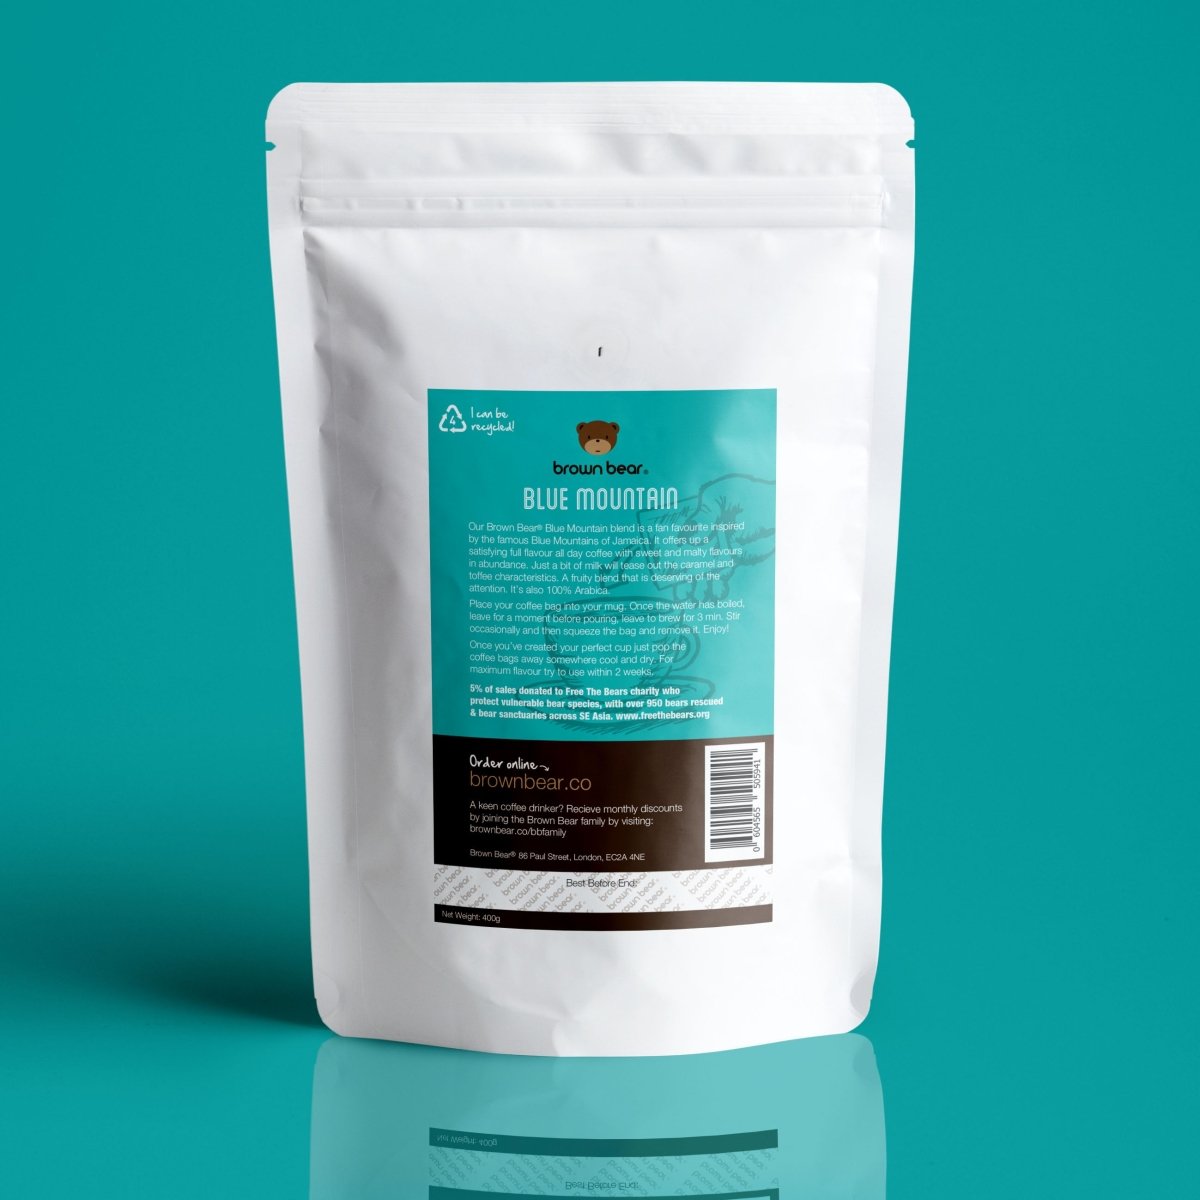 Blue Mountain Coffee Bags, Strength 3, Medium Roast - Brown Bear Coffee